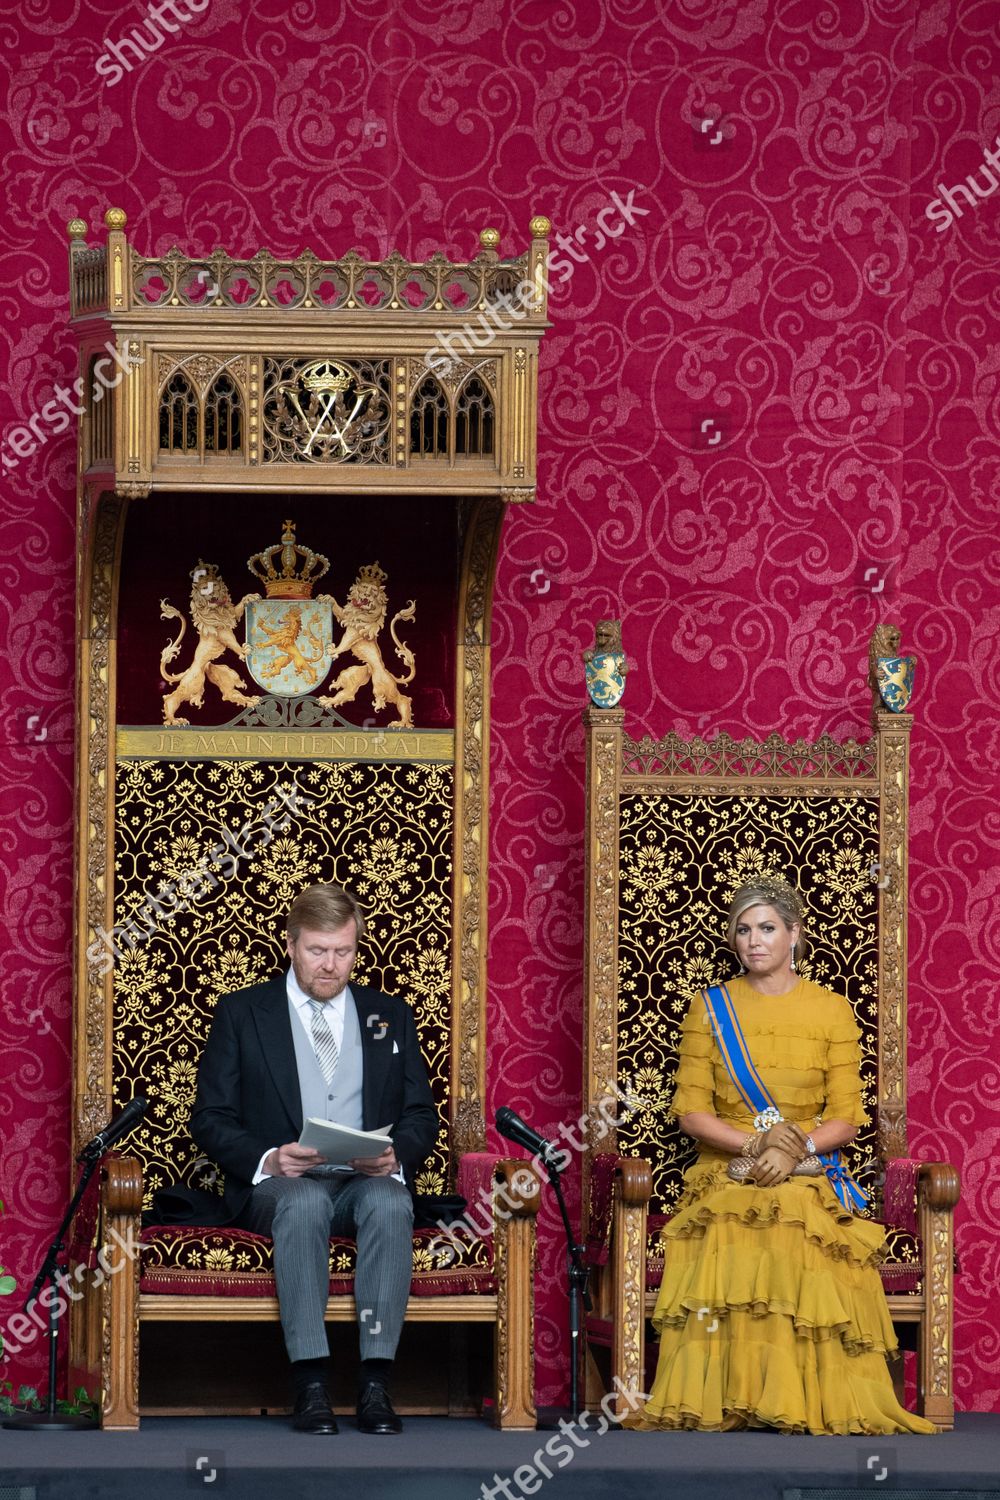 prinsjesdag-ceremony-the-hague-the-netherlands-shutterstock-editorial-10777335e.jpg